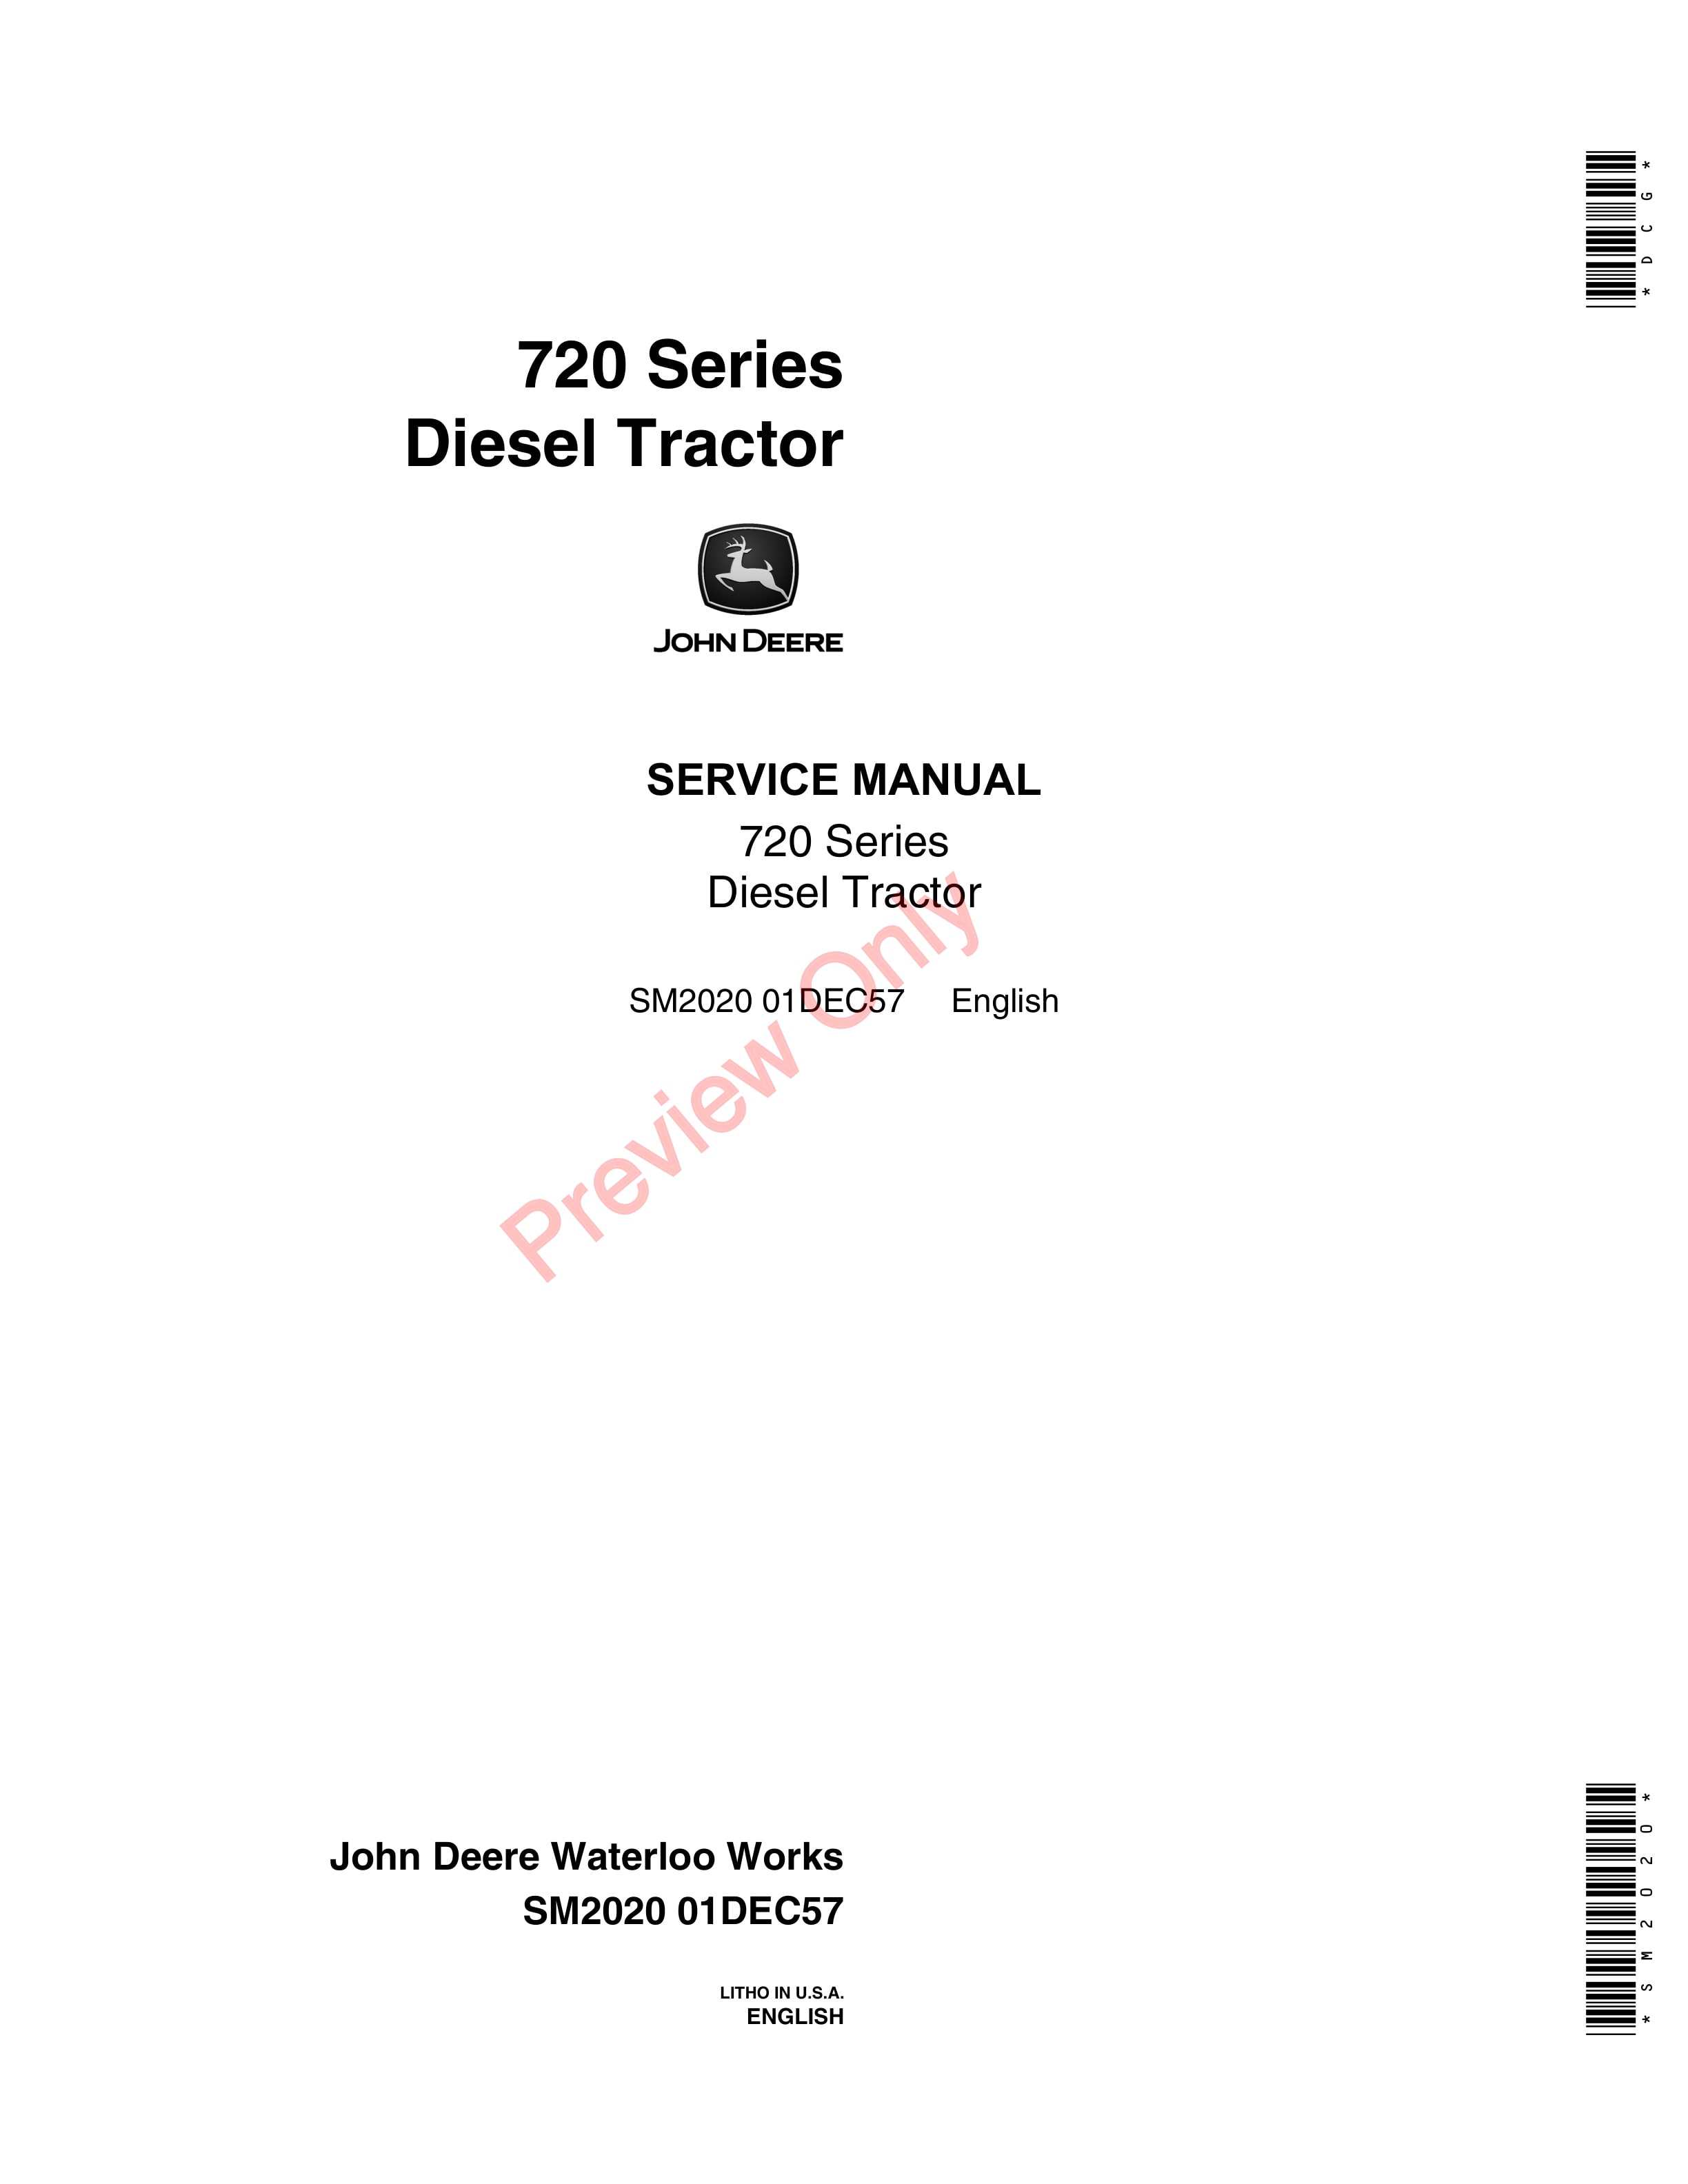 John Deere 720 Series Diesel Tractors Service Manual SM2020 01DEC57-1